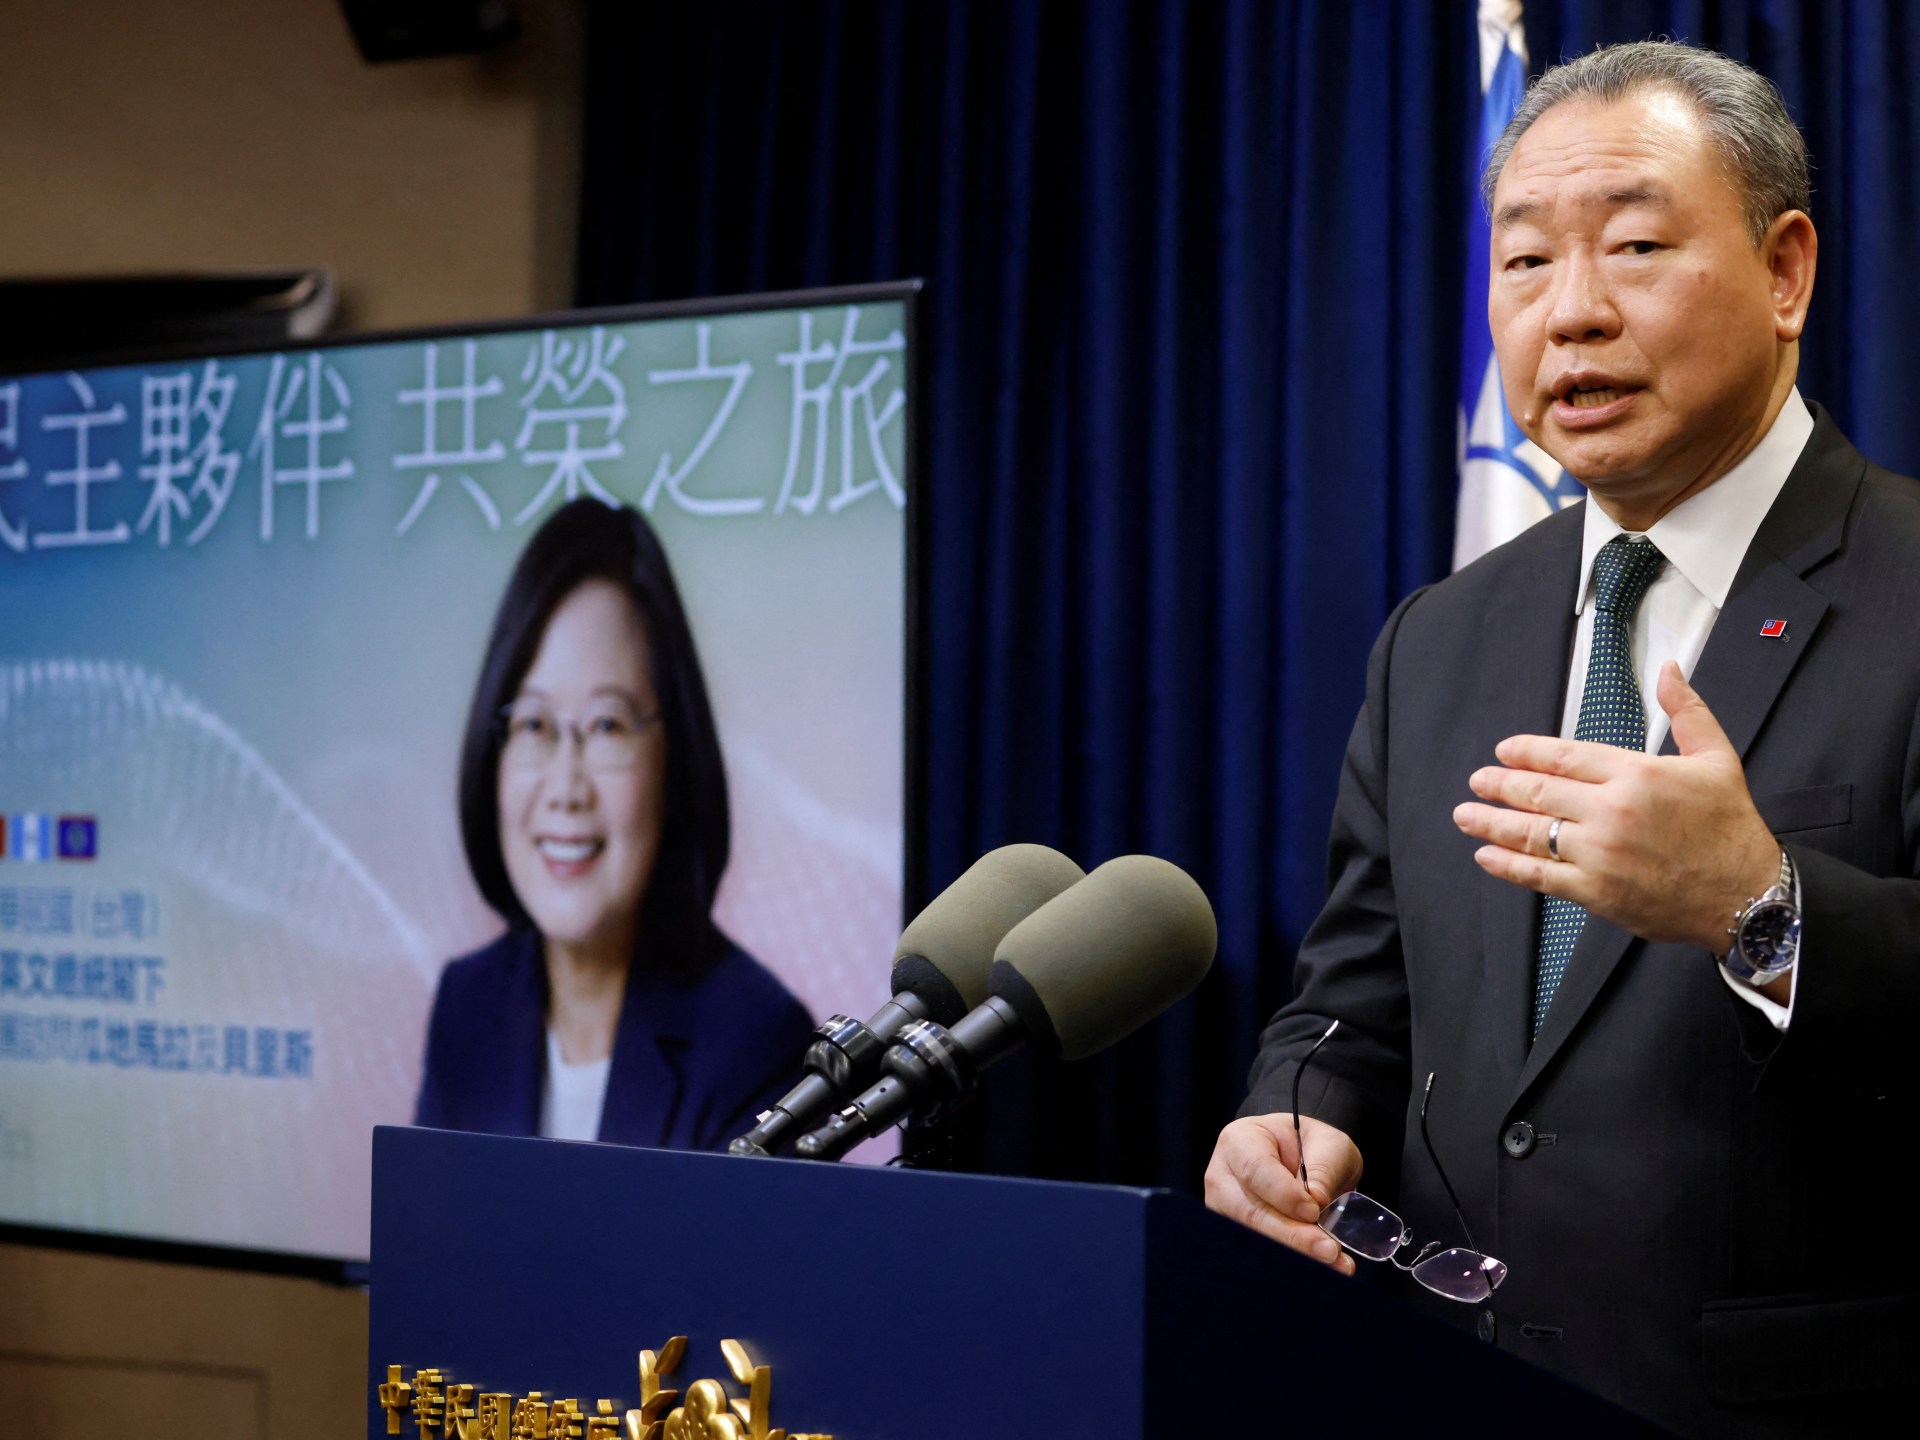 Taiwan president announces trip to the Americas, stirring concern